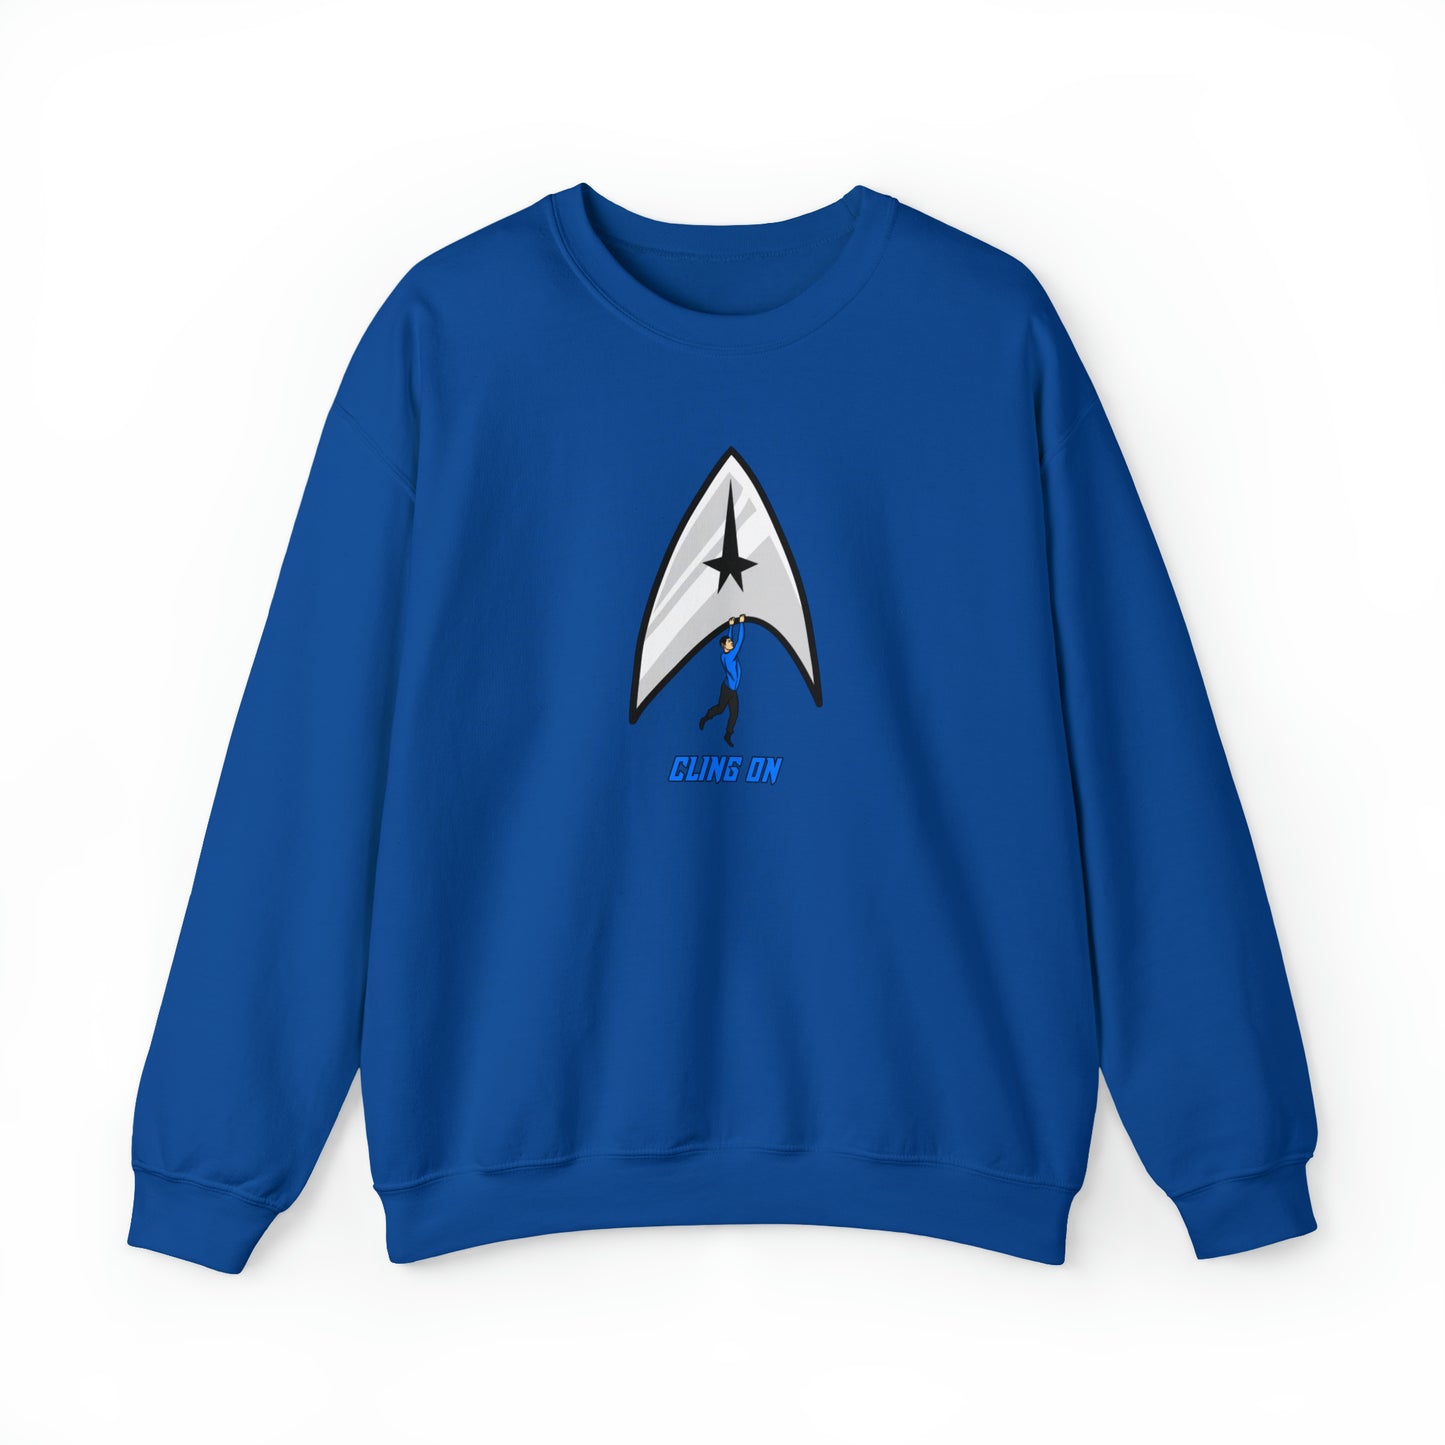 Custom Parody Crewneck Sweatshirt, Cling-on Design